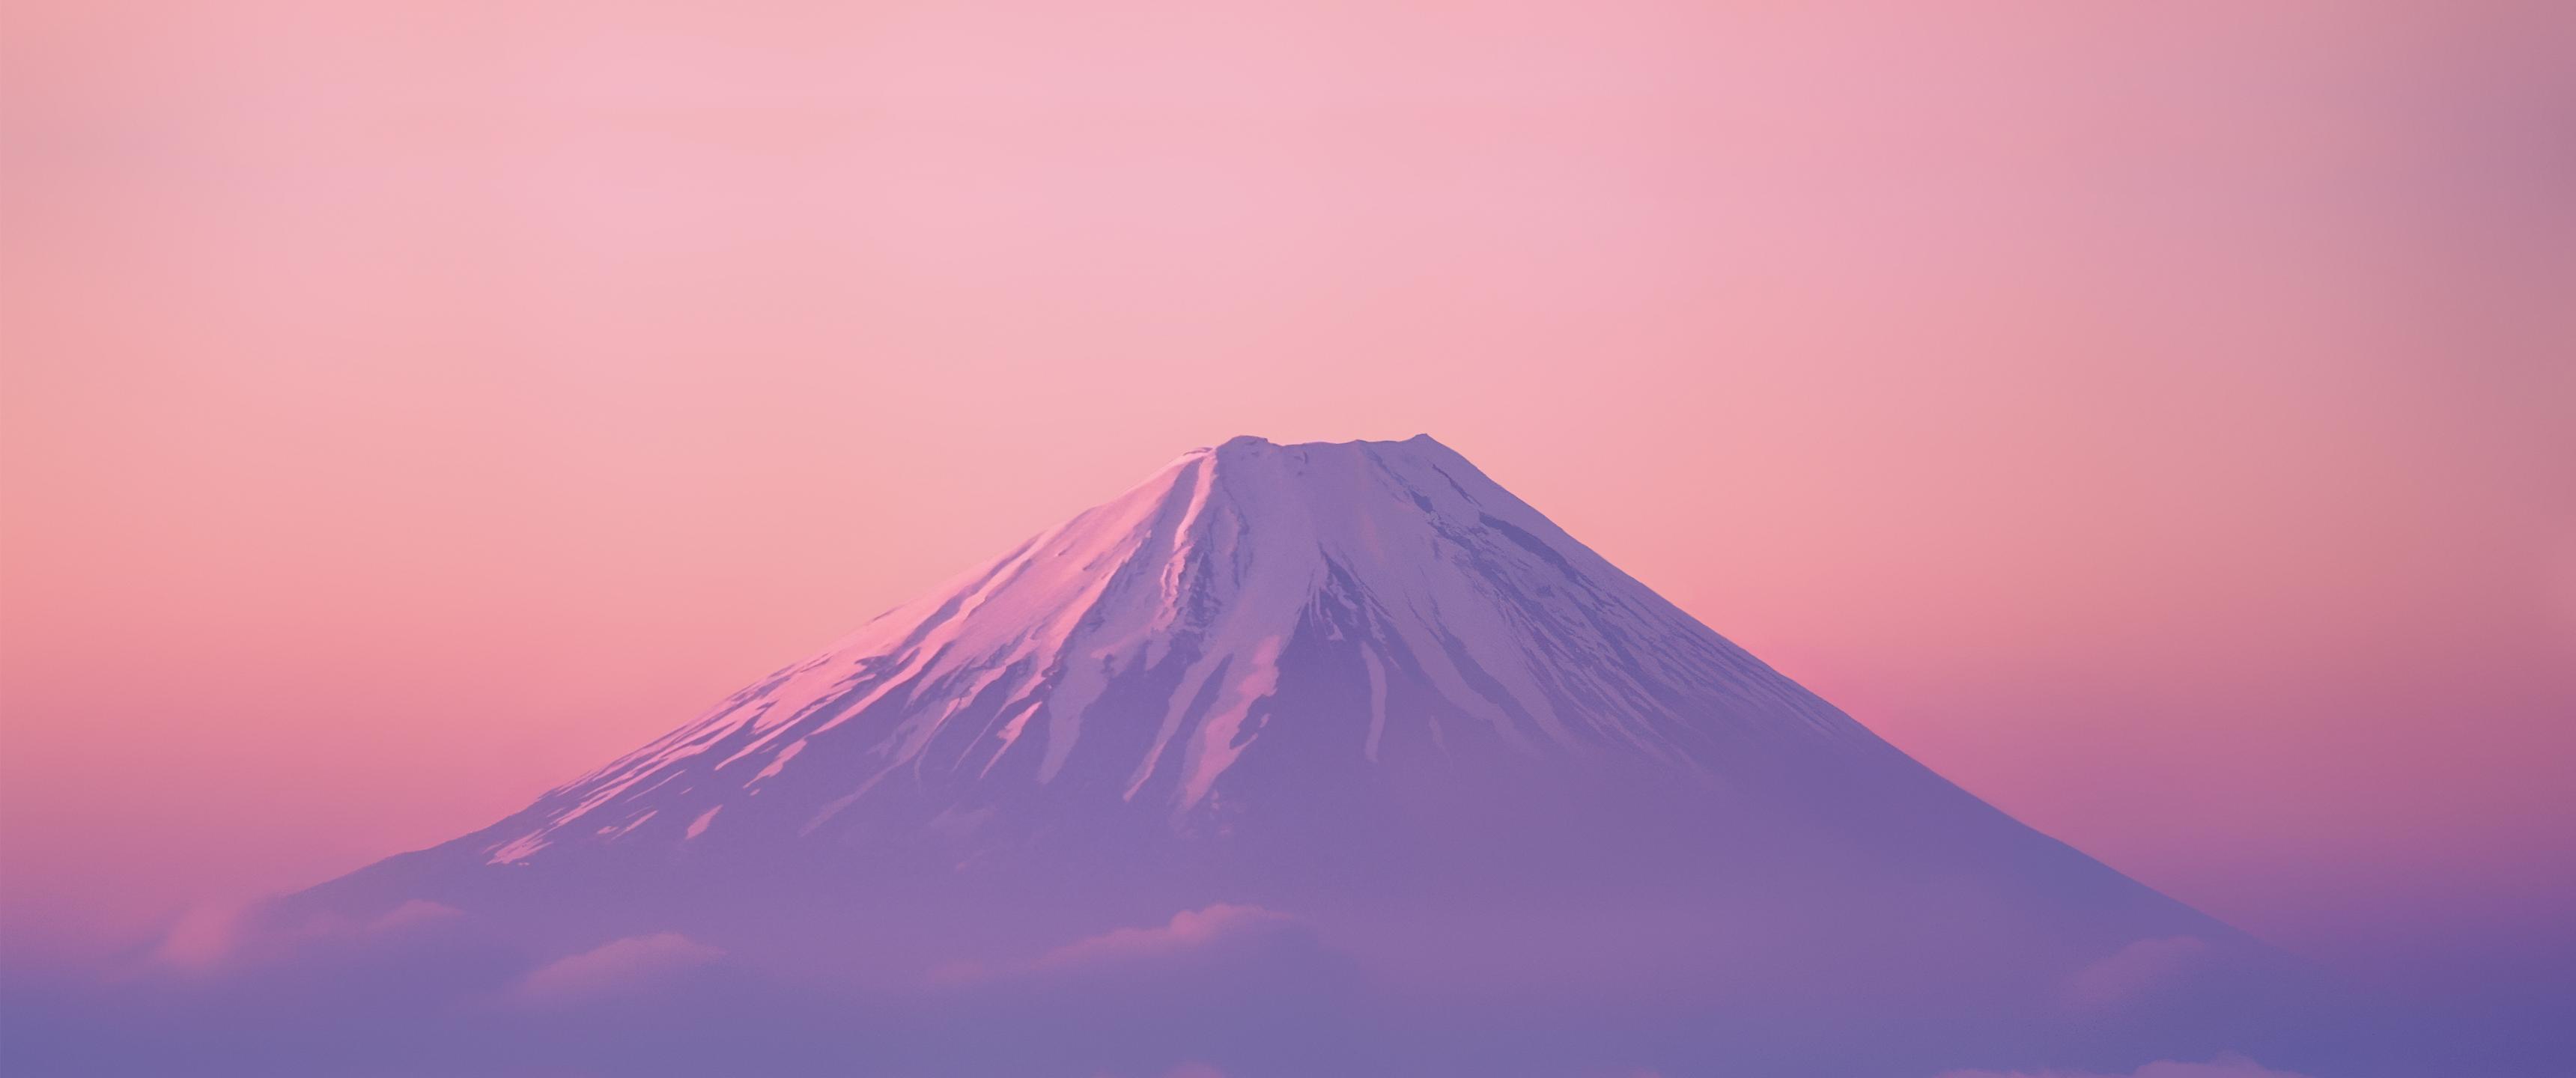 General 3440x1440 ultrawide mountains Mount Fuji Japan